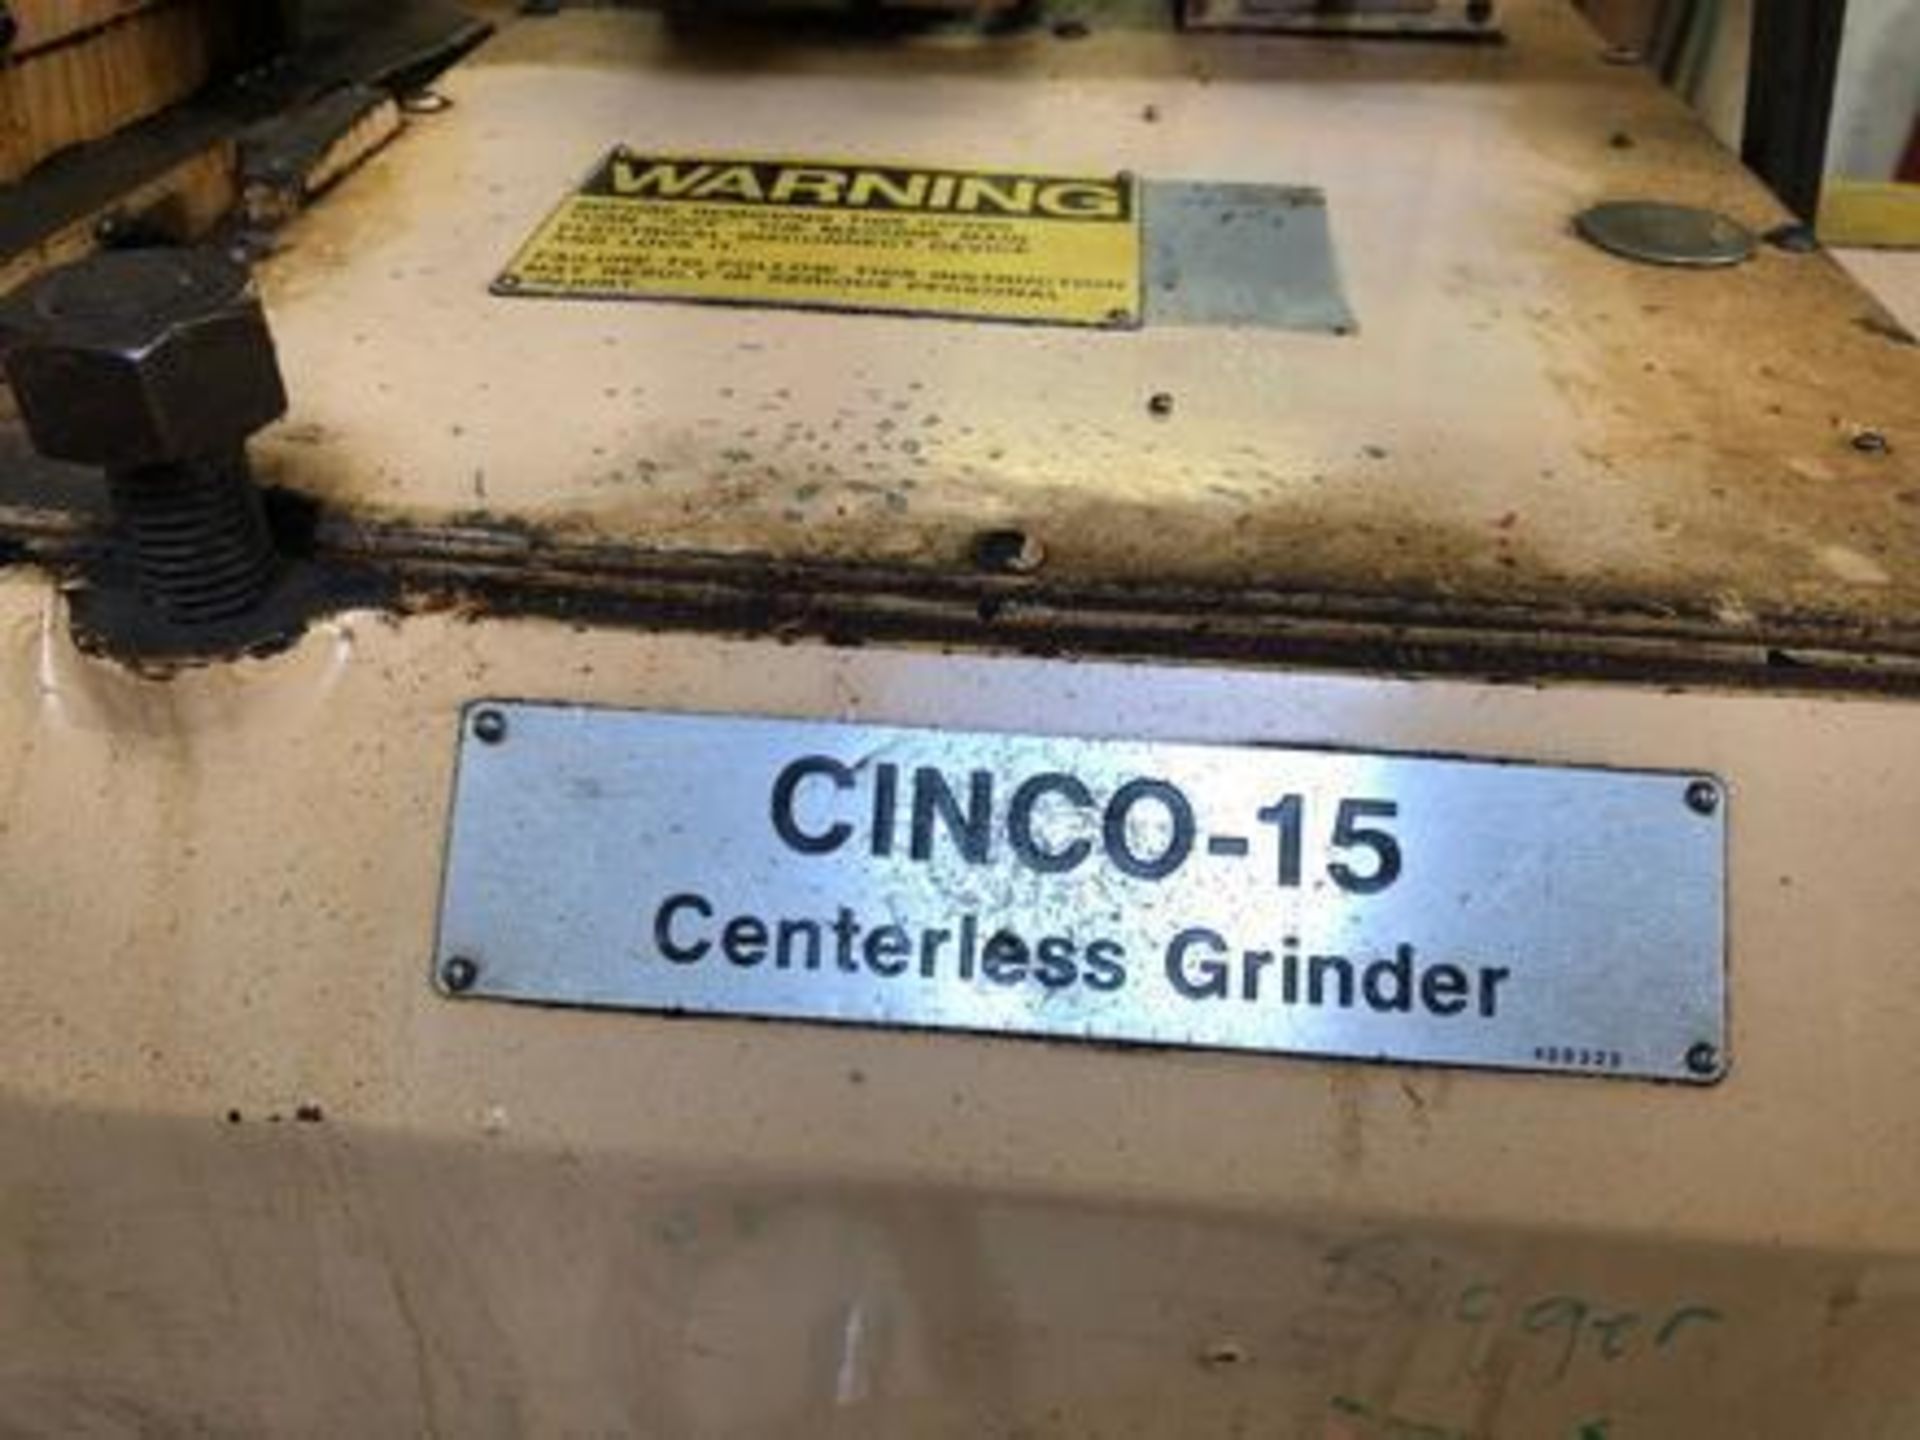 Cincinnati Model CINCO-15 Centerless Grinder S/N: 350200082-0008, Control Panel Cincinnati Milacron - Image 9 of 22